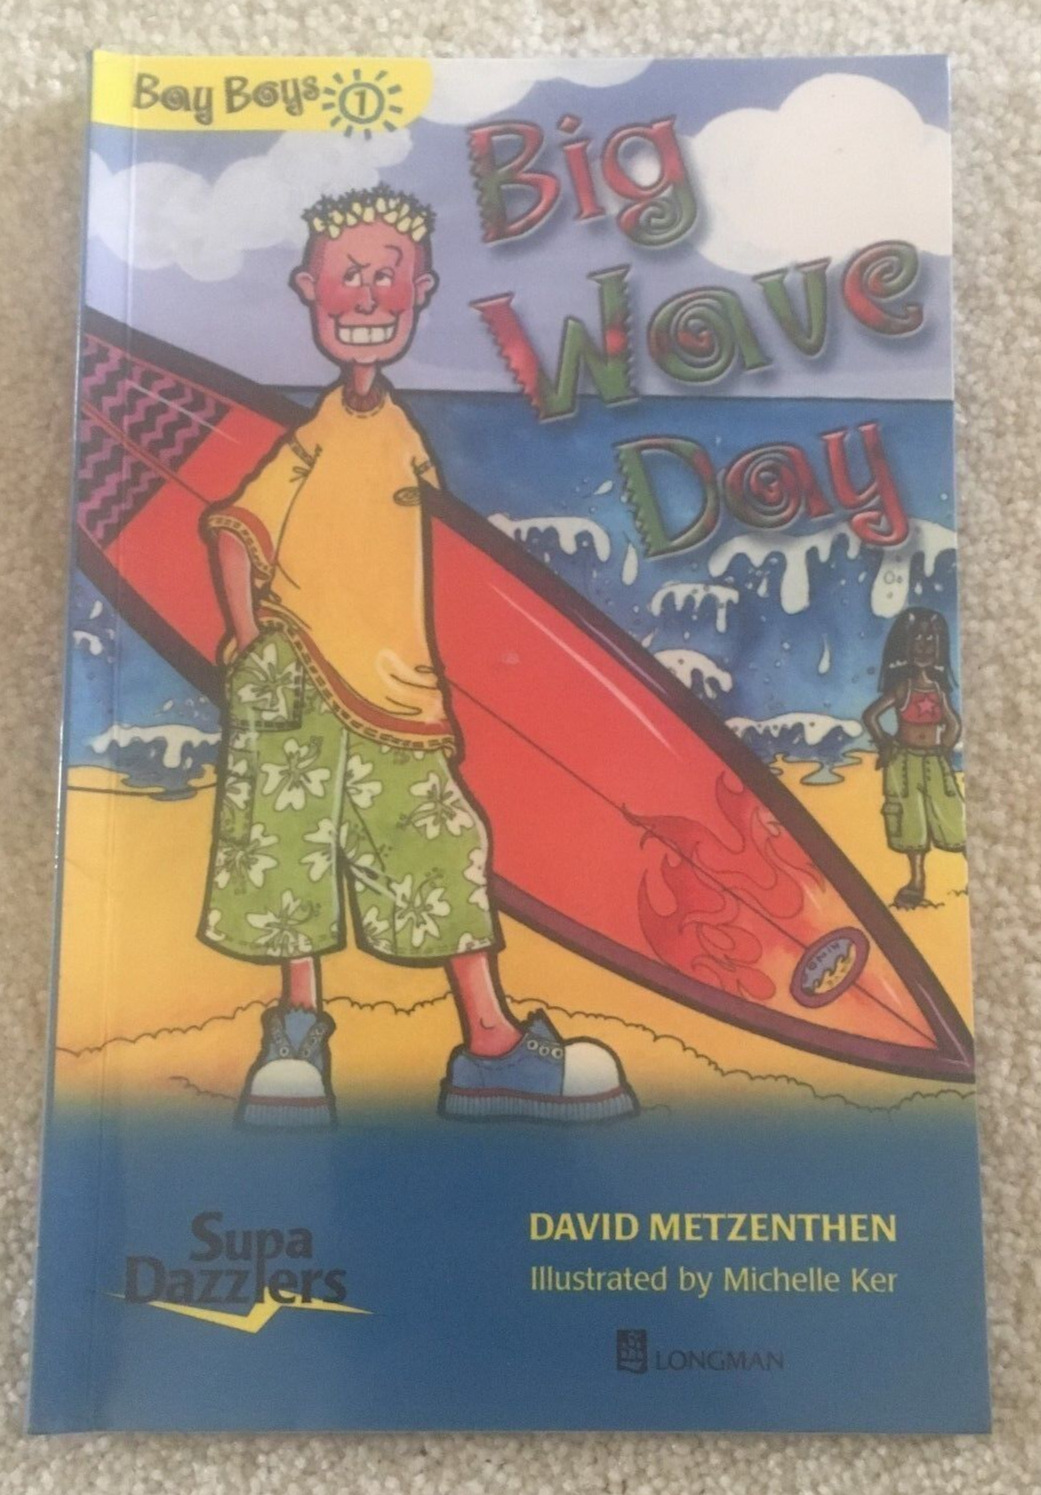 DAVID METZENTHEN, BAY BOYS. BIG WAVE DAY. 0733906230. KIDS FICTION